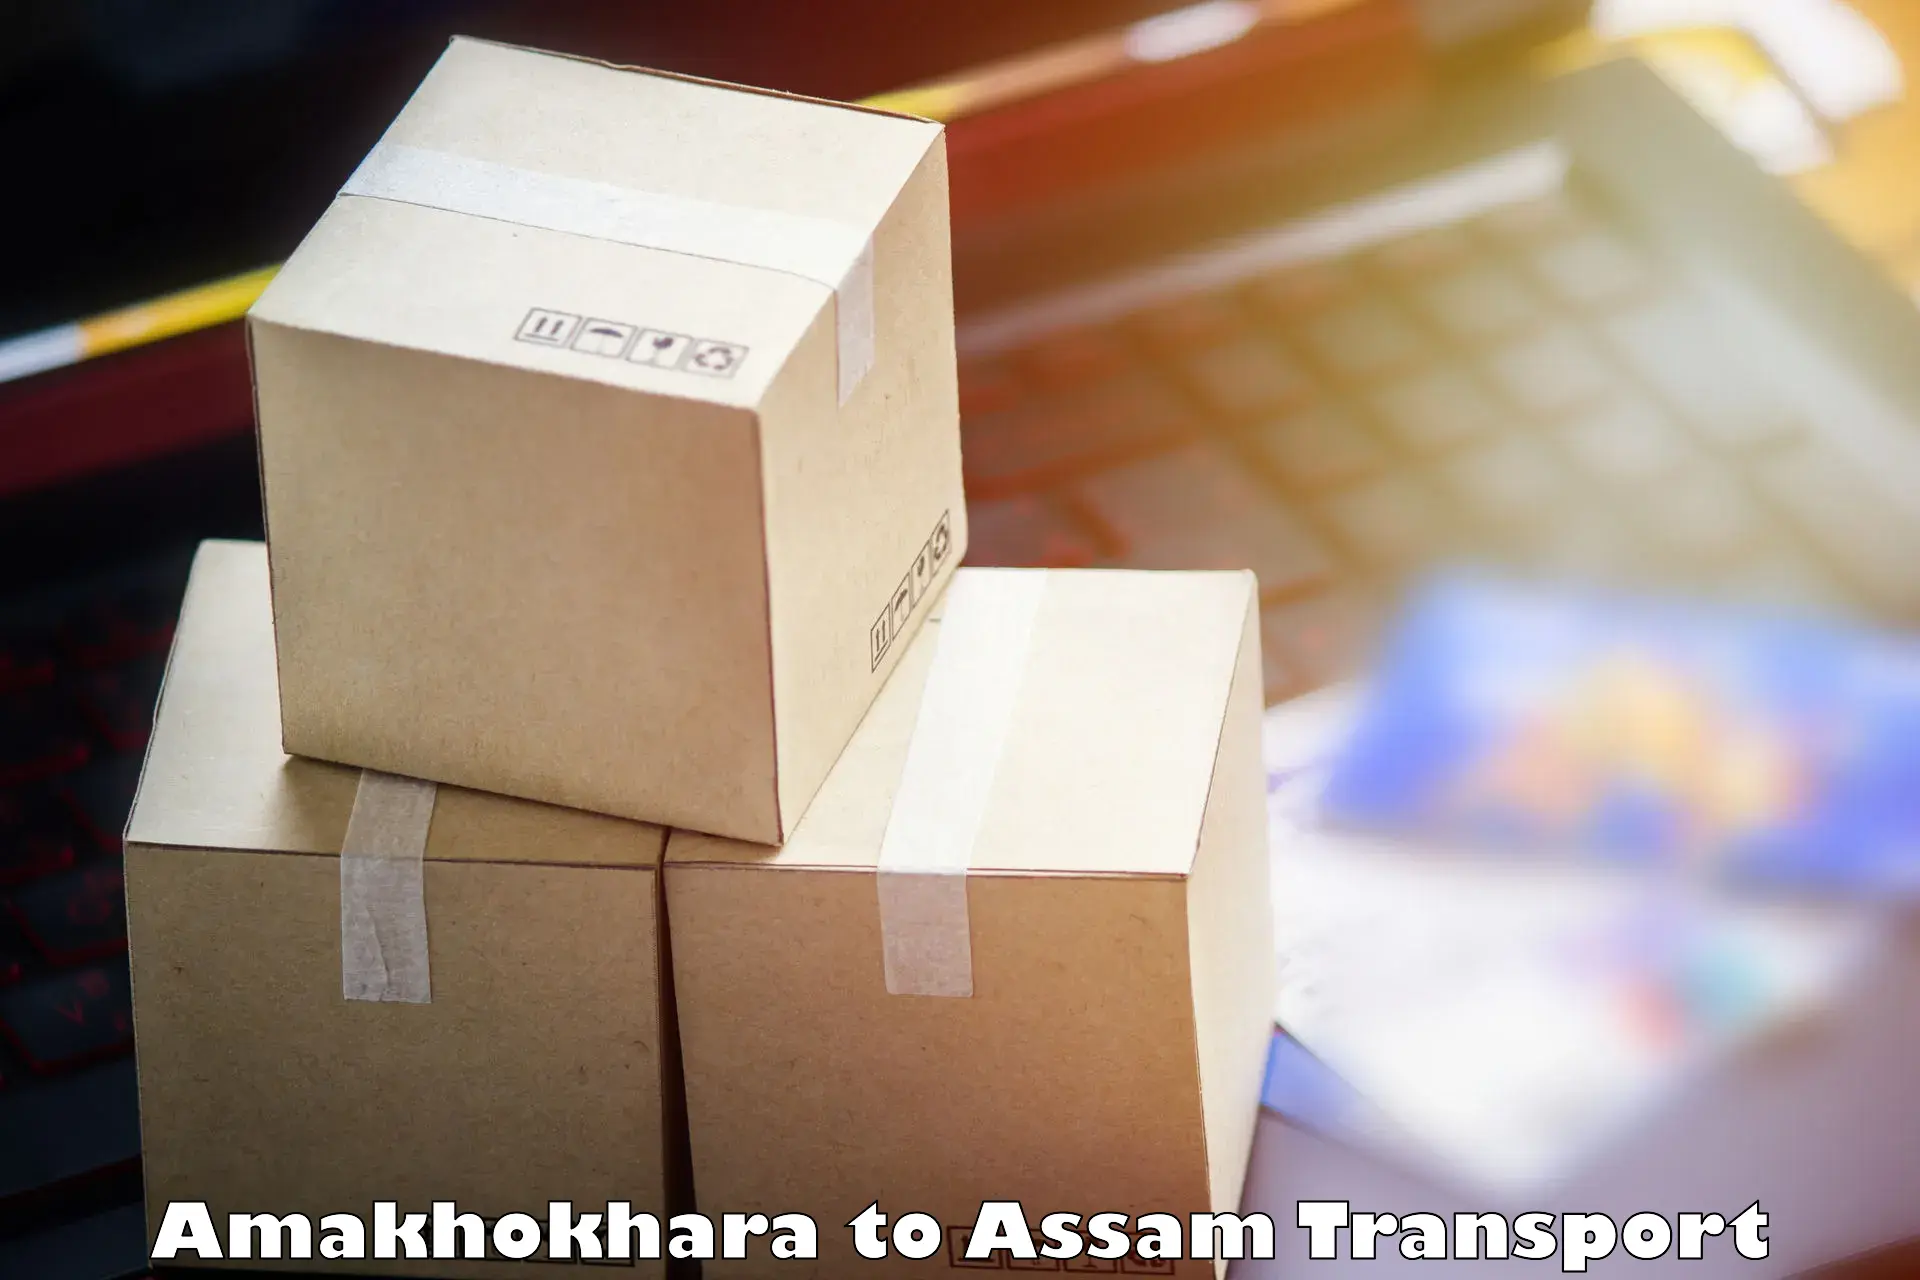 Truck transport companies in India Amakhokhara to Bhaga